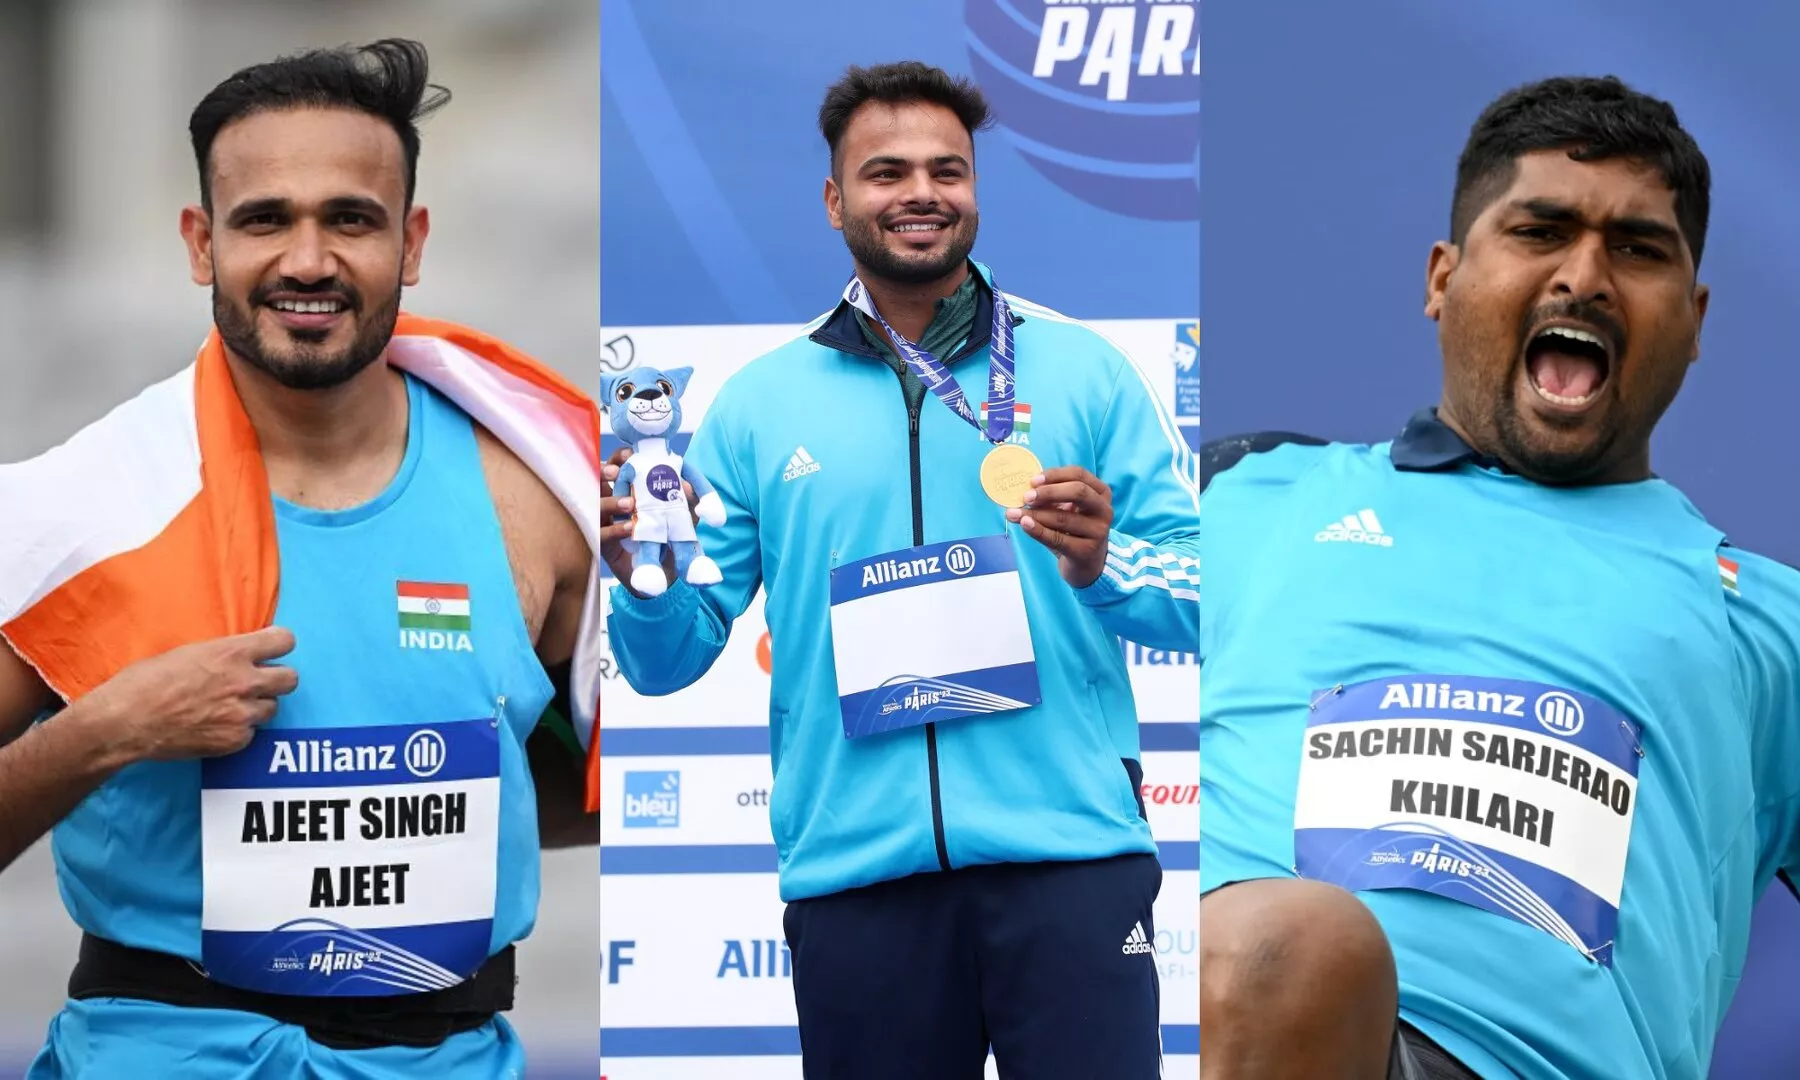 India record bestever medal tally in World Para Athletics